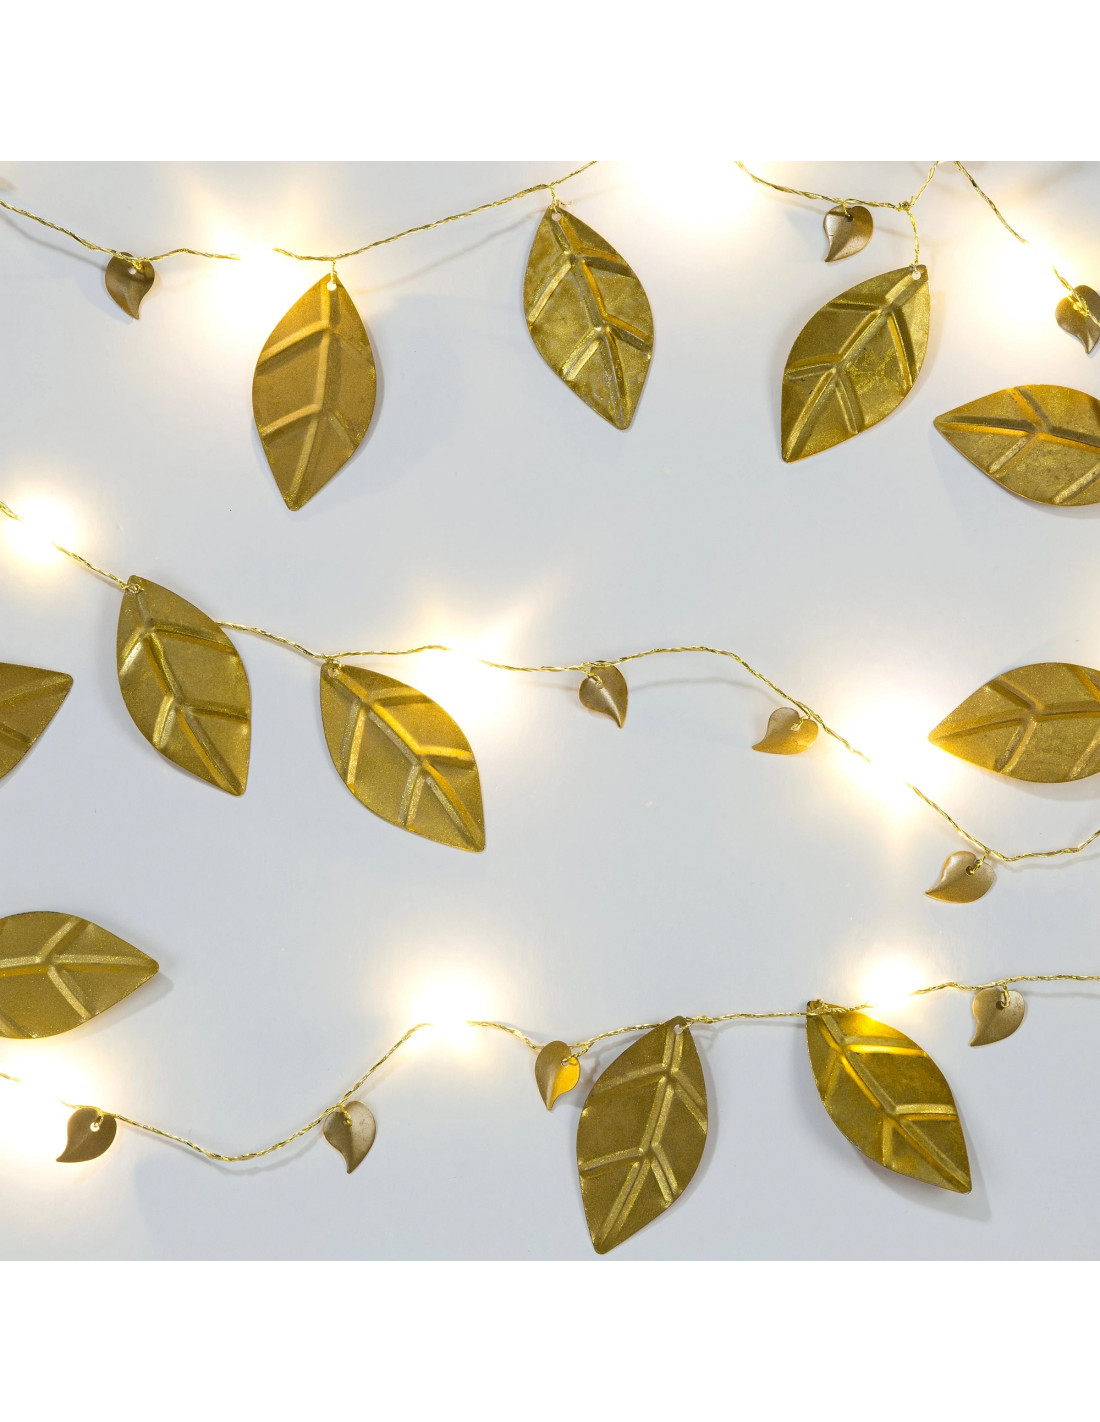 Guirlande lumineuse ornée de feuilles dorées